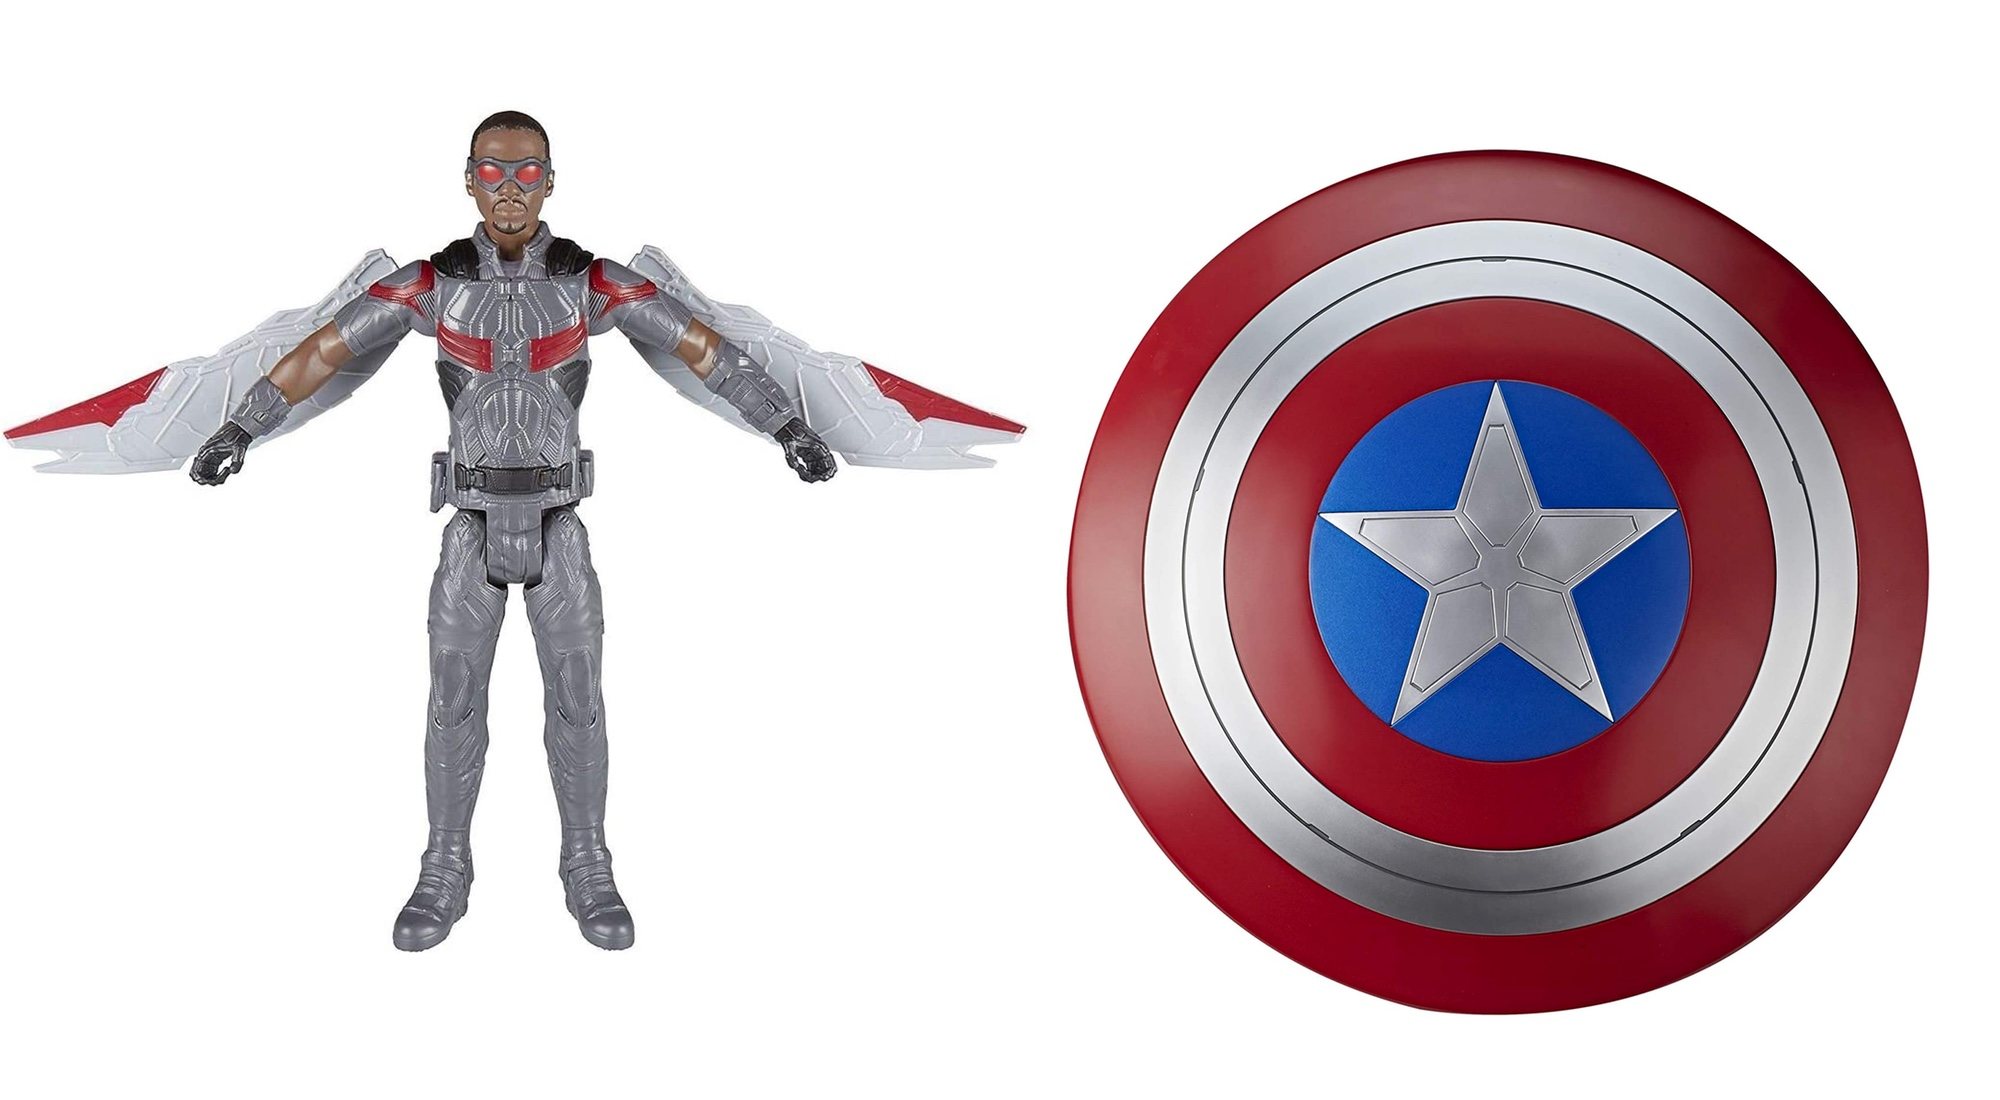 Figura de acción de Falcon y escudo de Capitán América